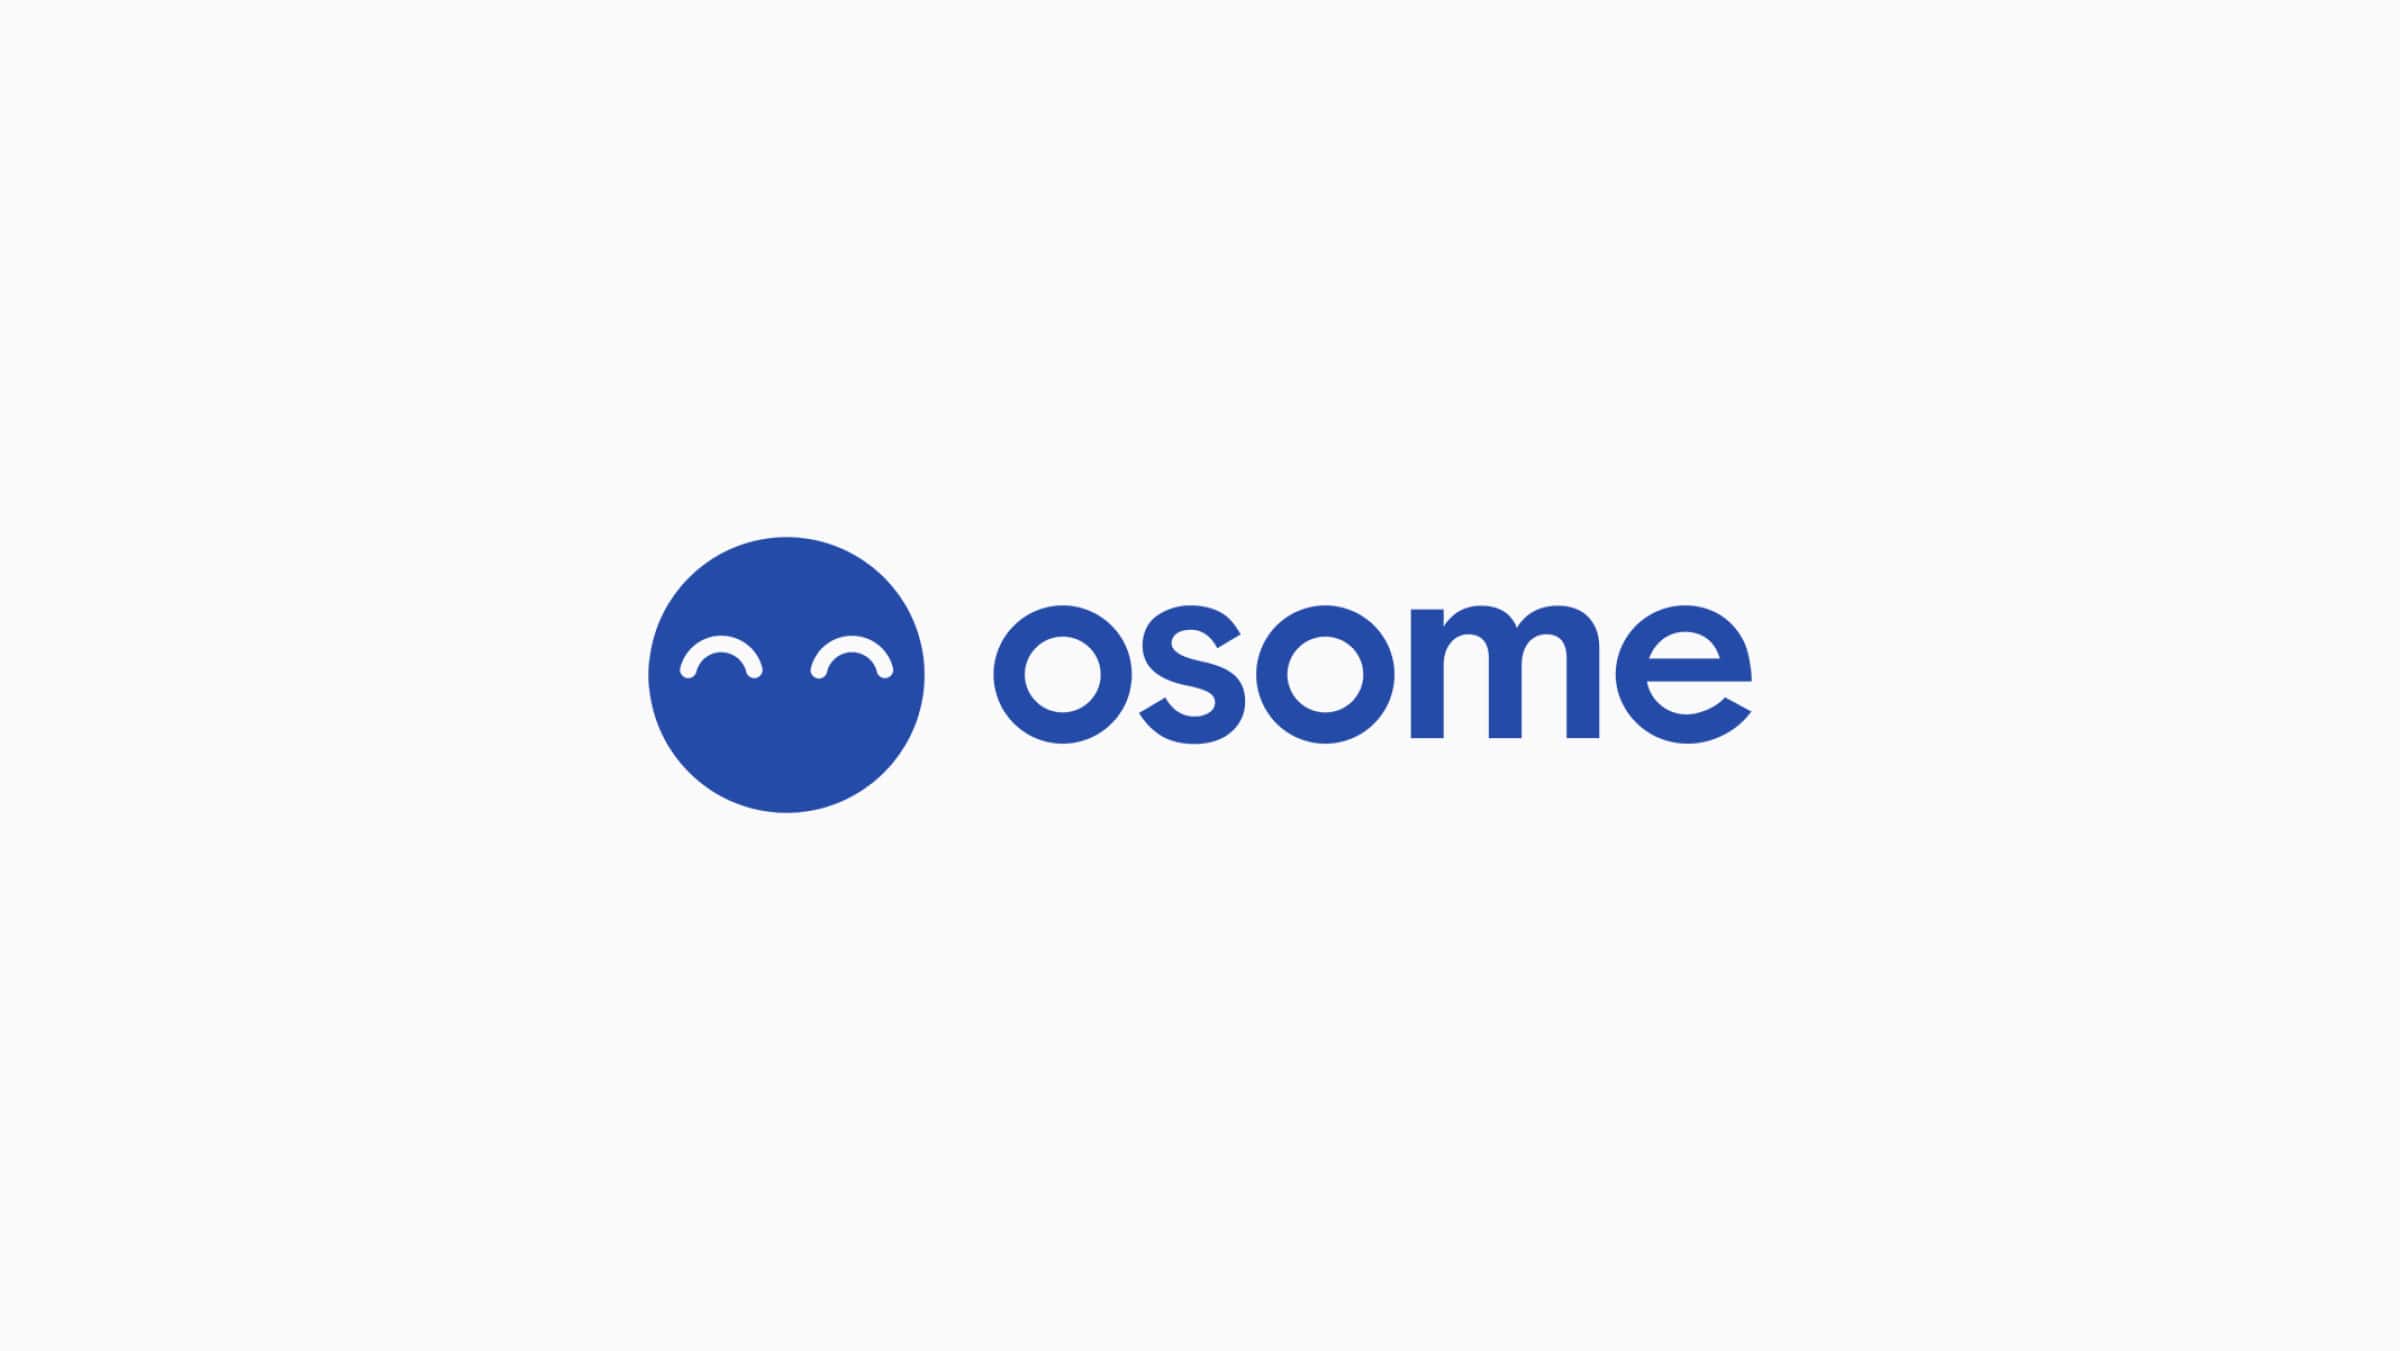 The Osome logo